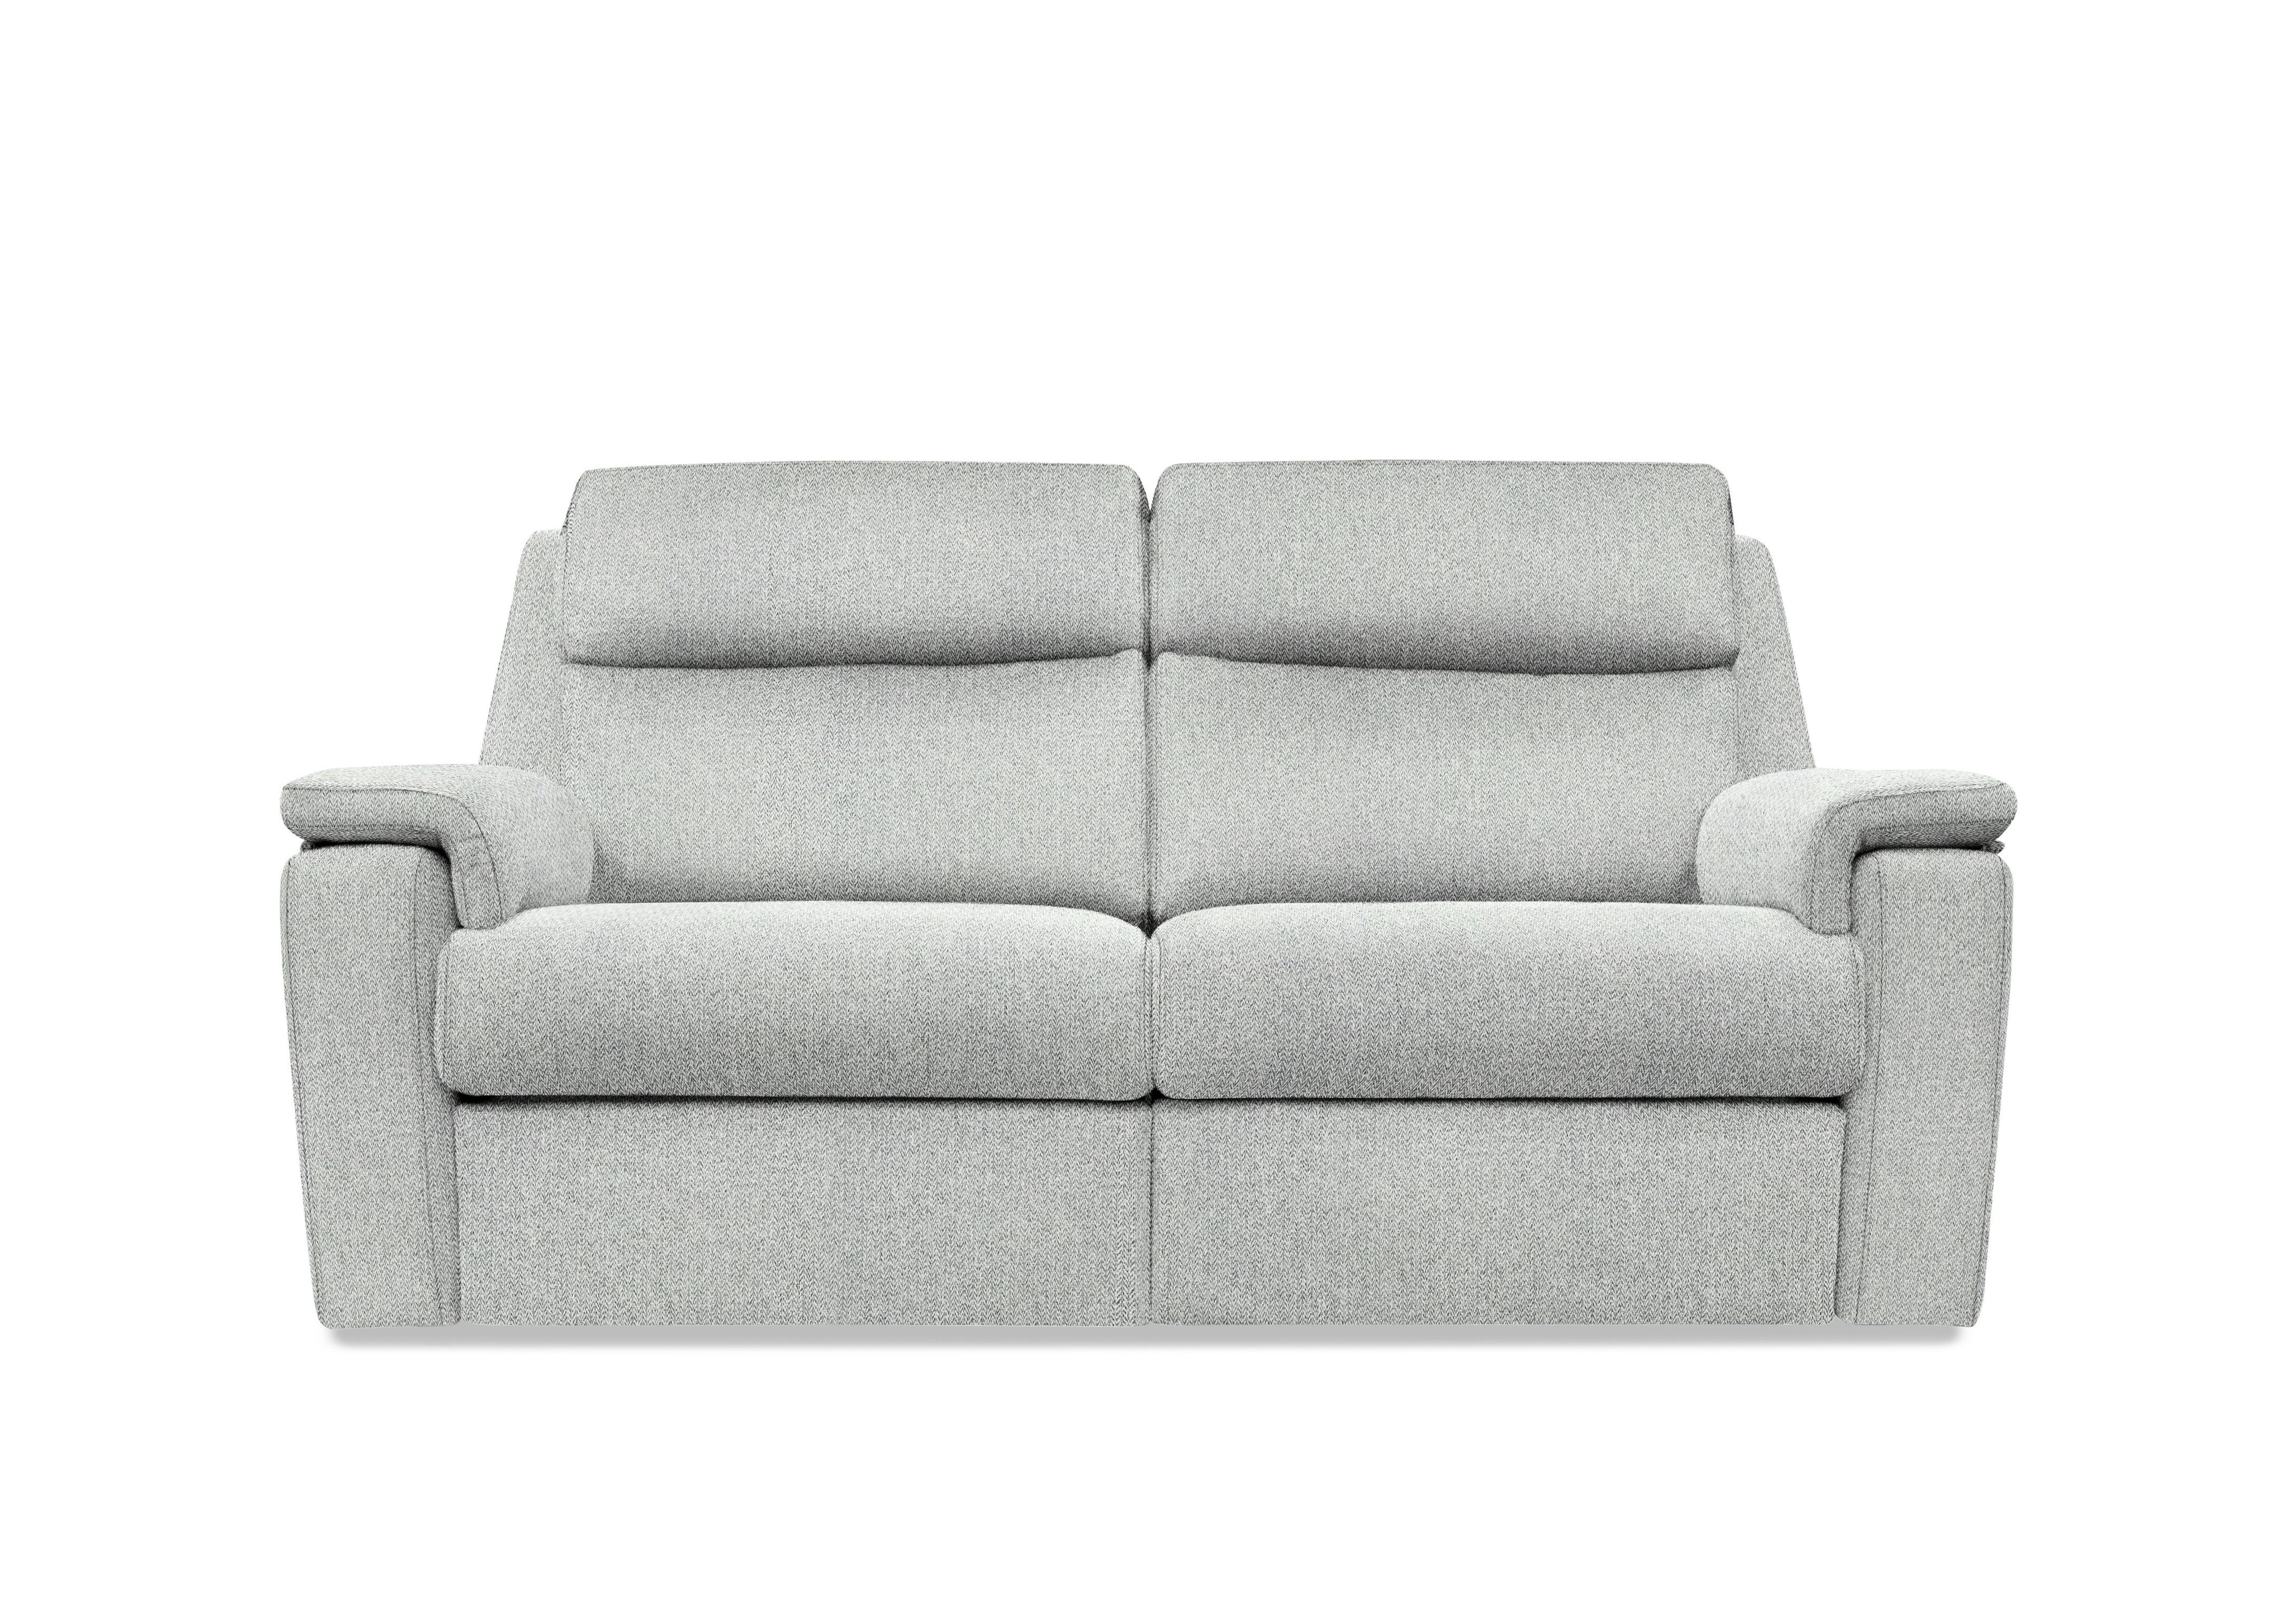 Thornbury 3 Seater Fabric Sofa in A011 Swift Cygnet on Furniture Village